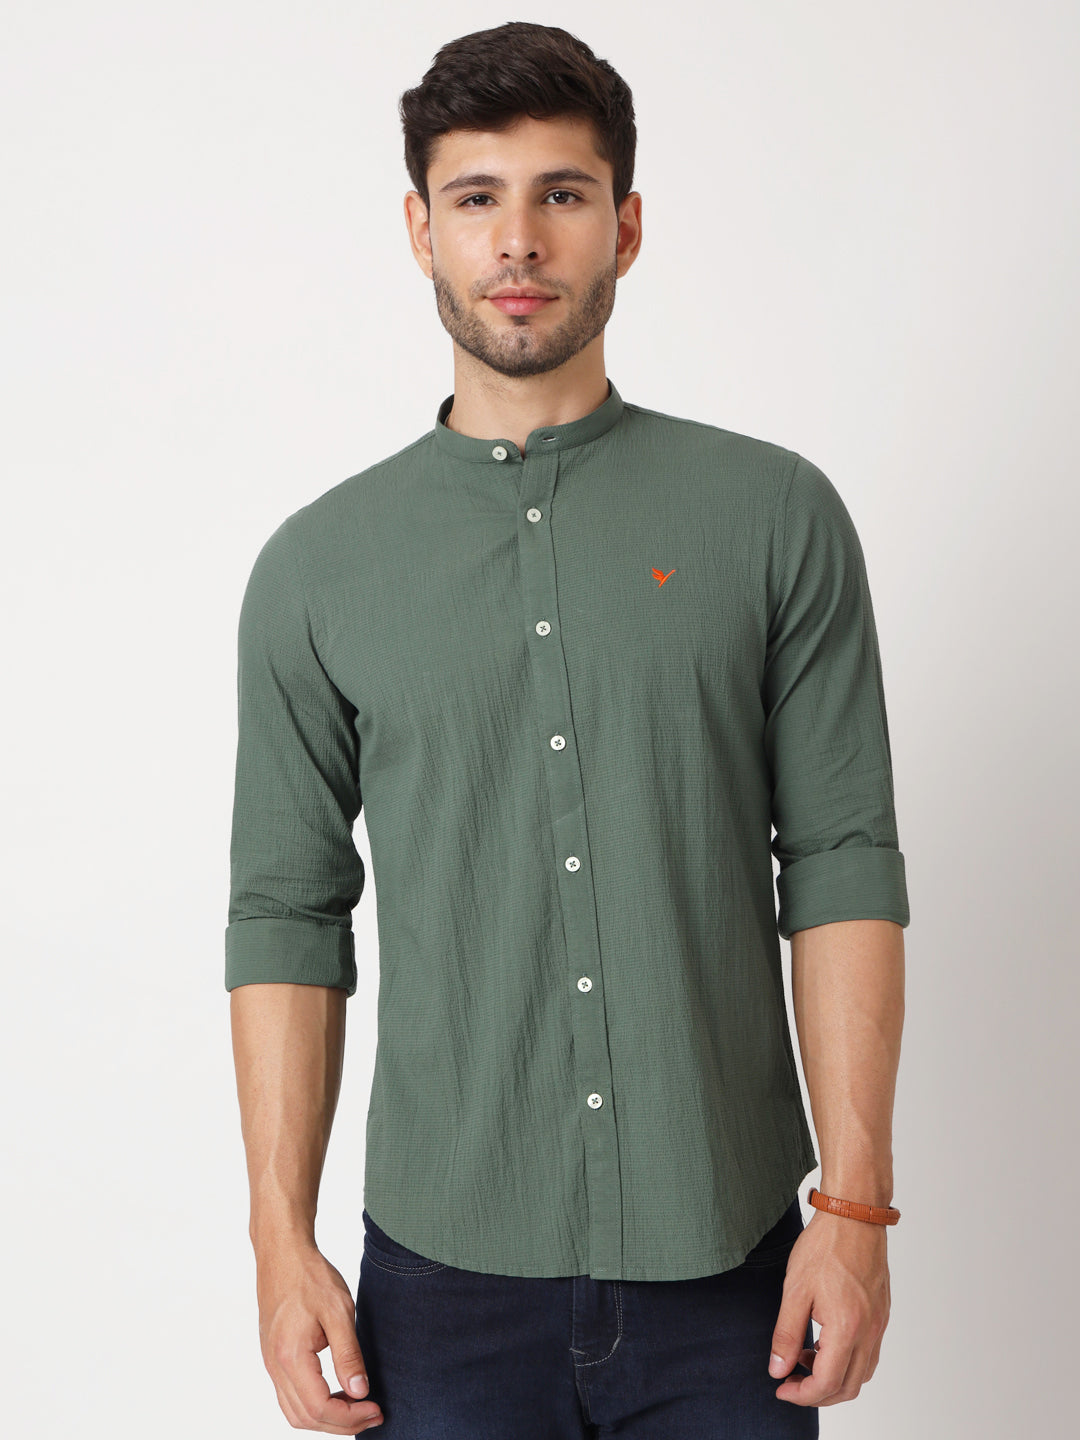 Amswan Premium Men's Green Crinkle Cotton Shirt - Mandarin Collar, Long Sleeves